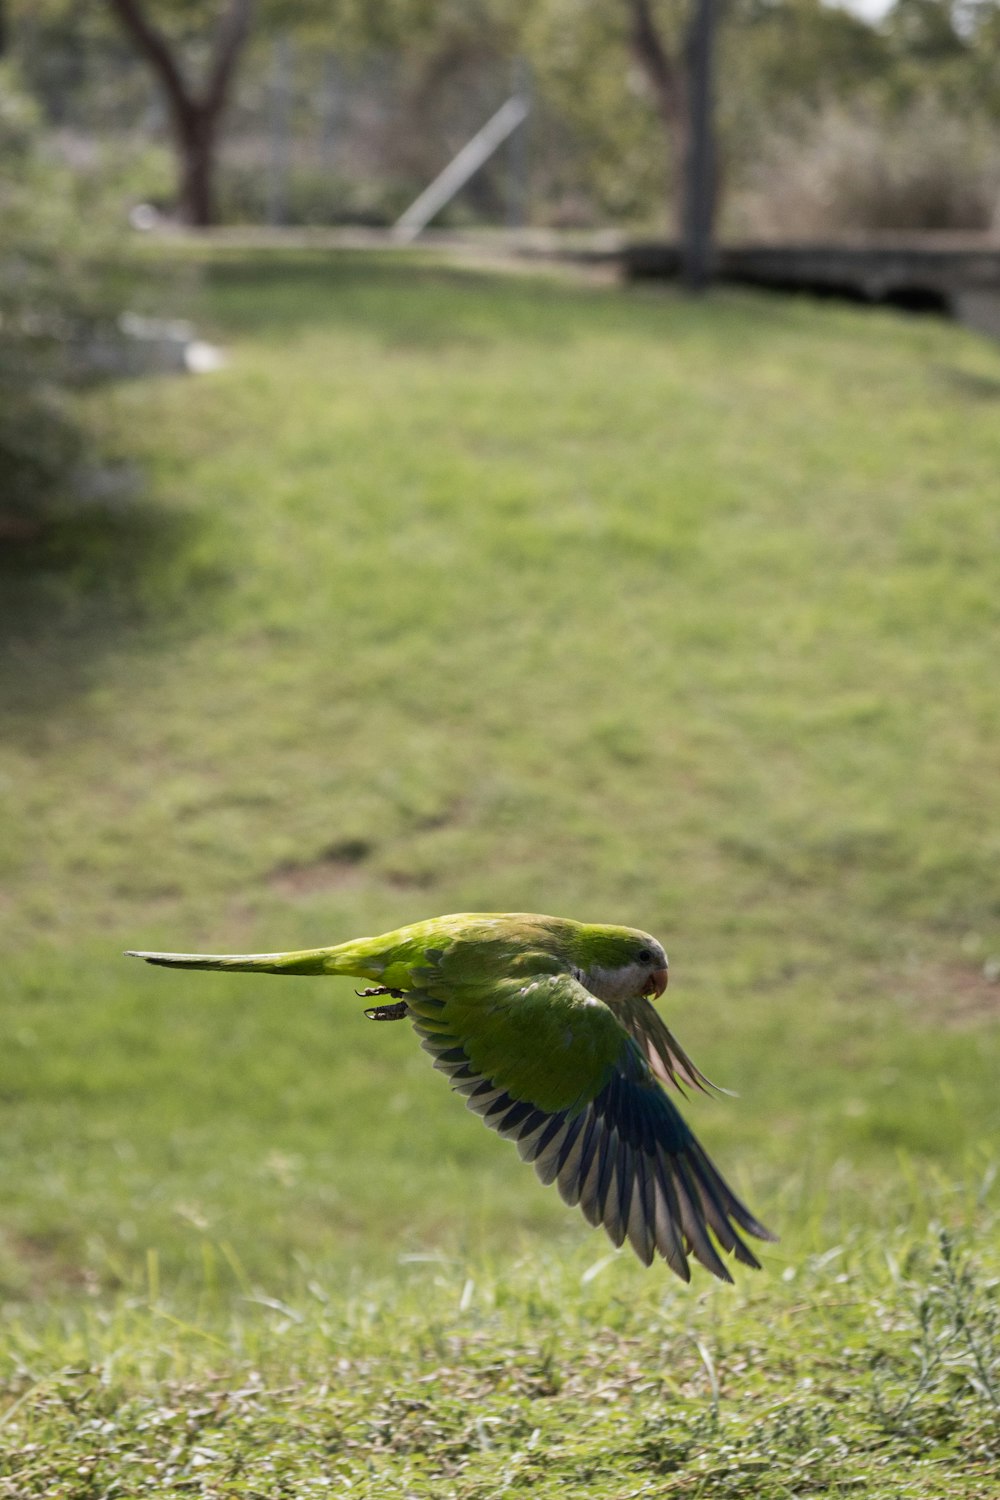 a green bird flying over a lush green field